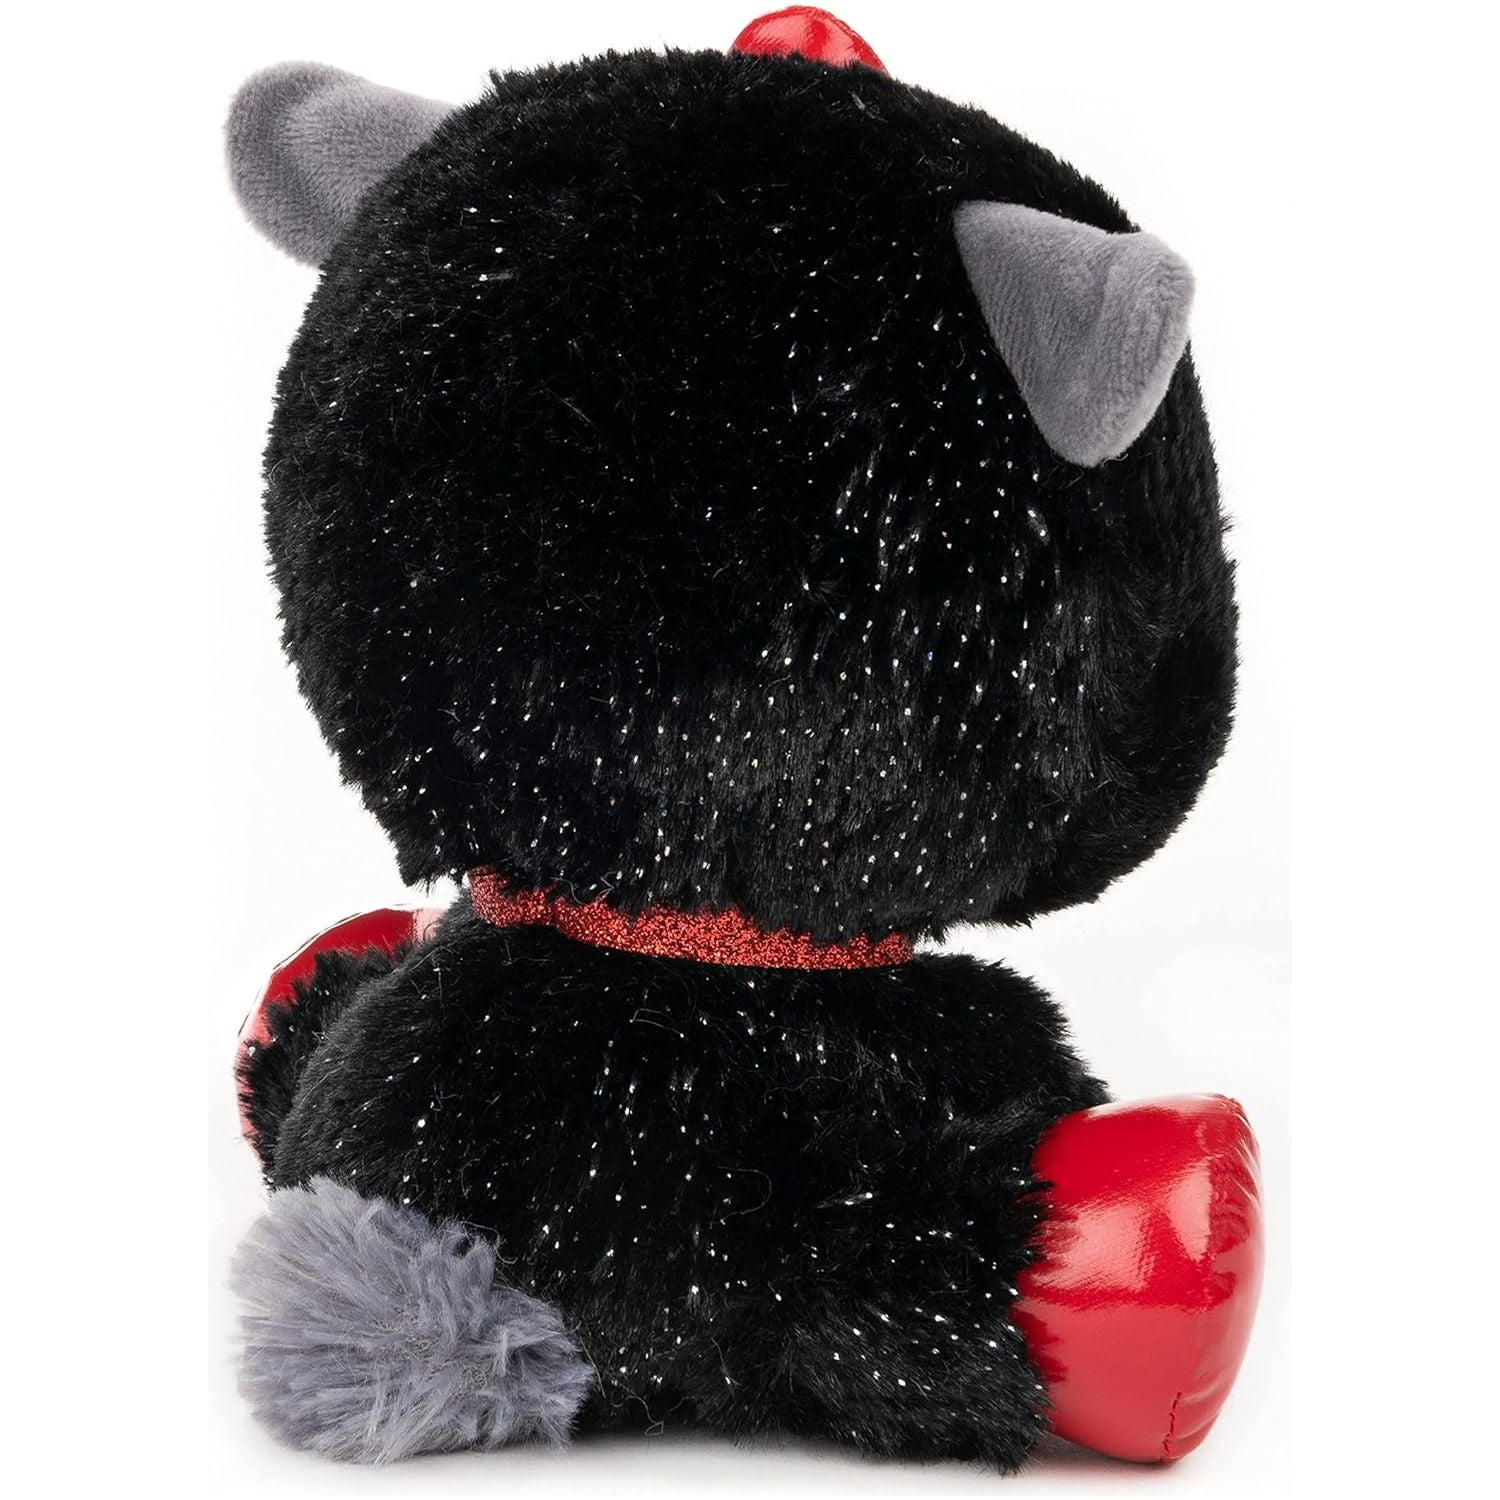 GUND P.Lushes Designer Fashion Pets Special-Edition Ba-Bah Noir Llama Premium Stuffed Animal, Black and Red, 6